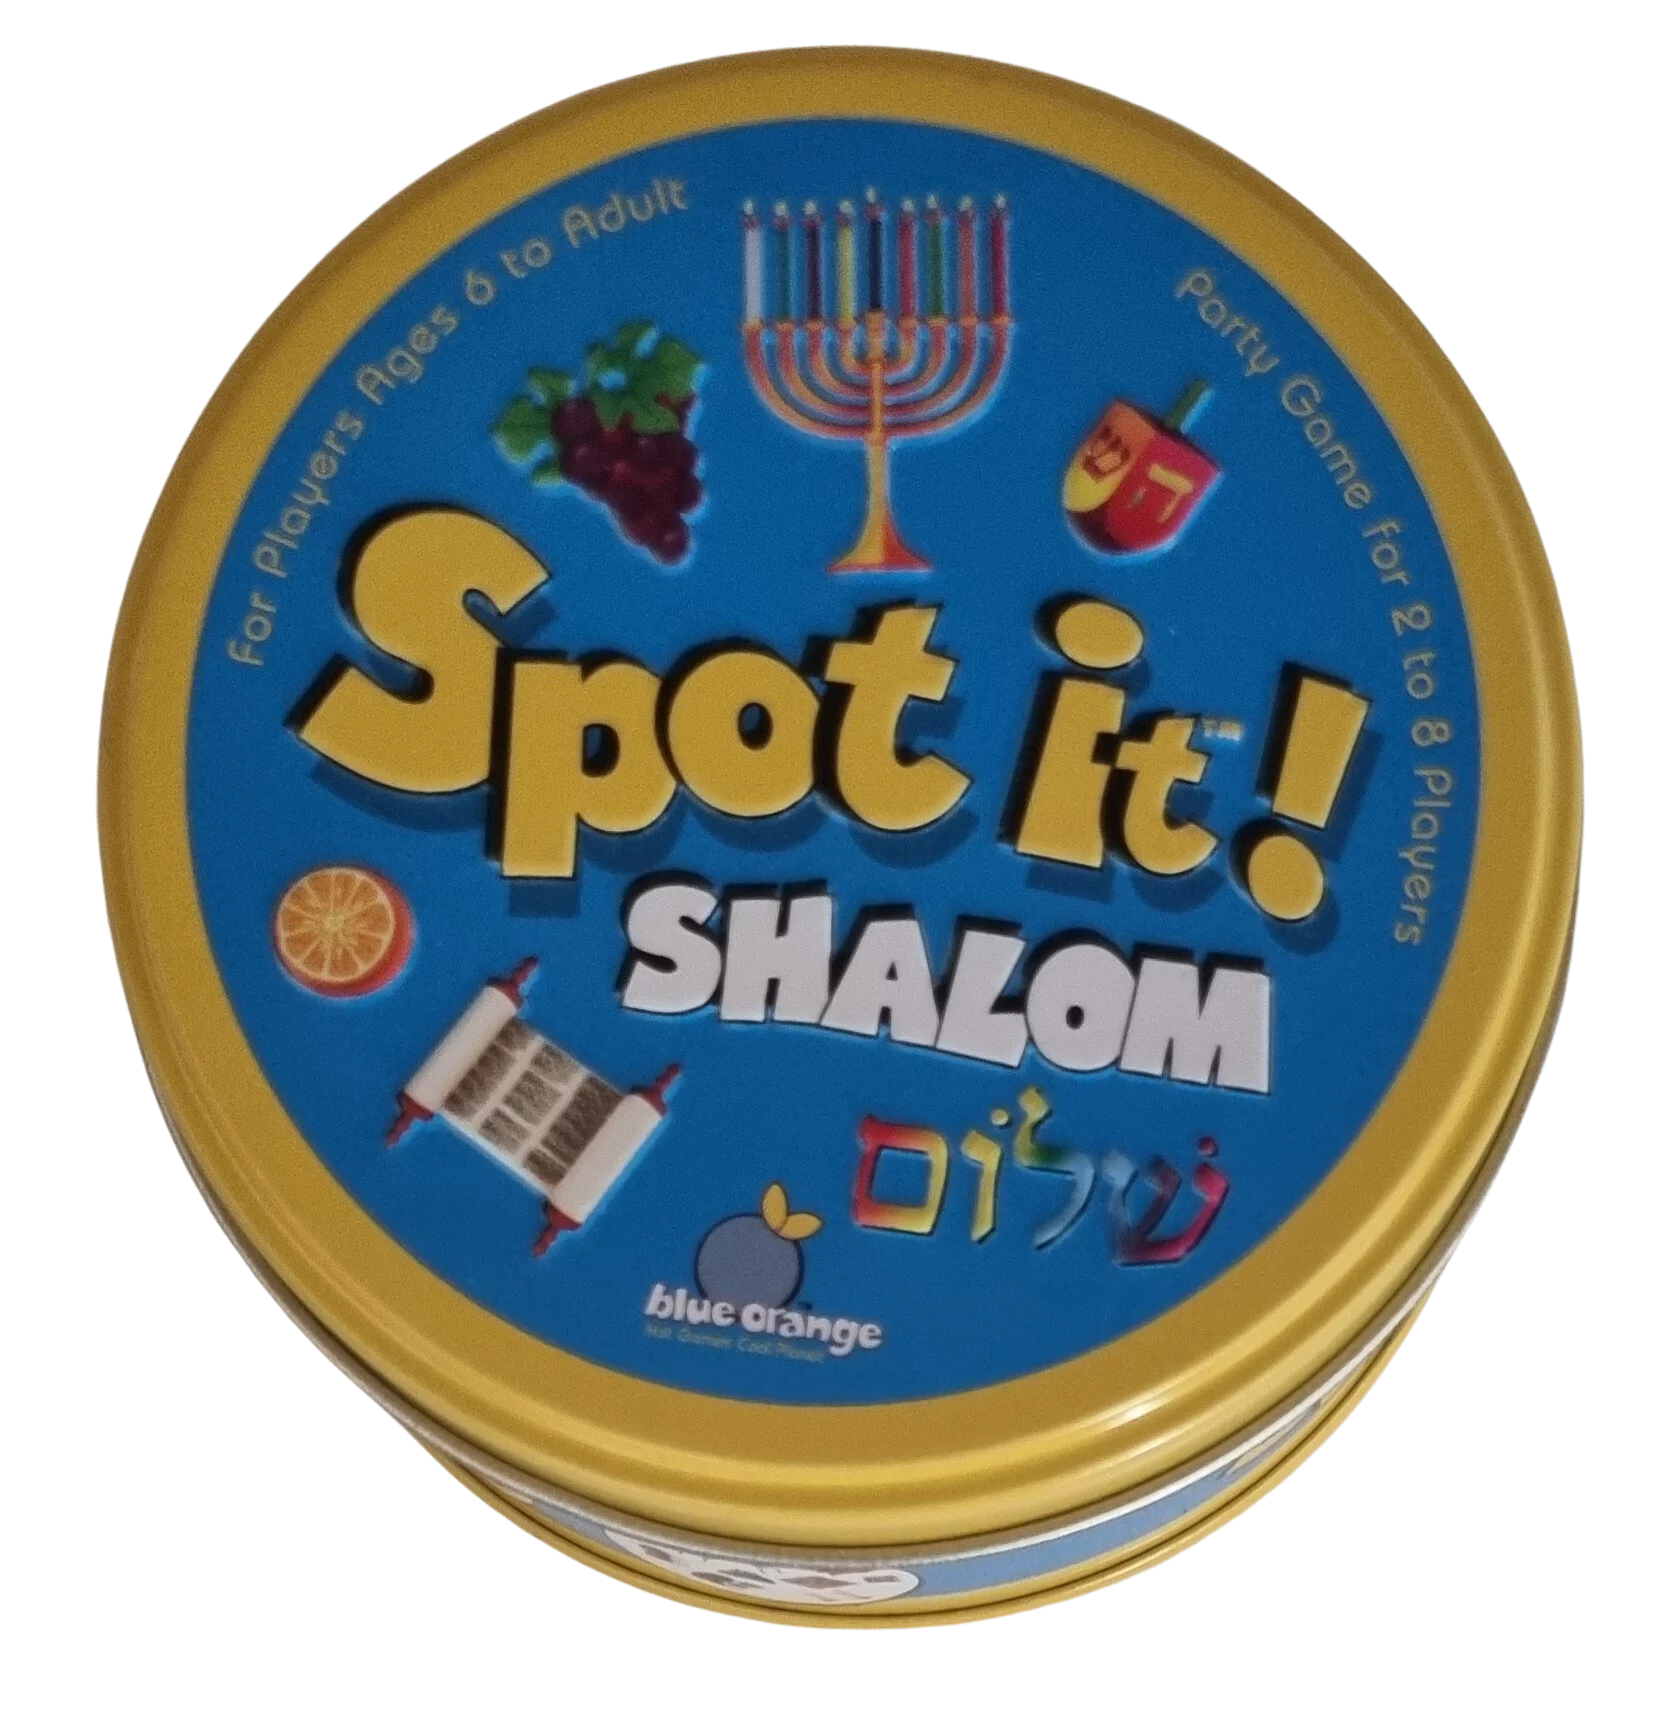 Spot it Game Shalom